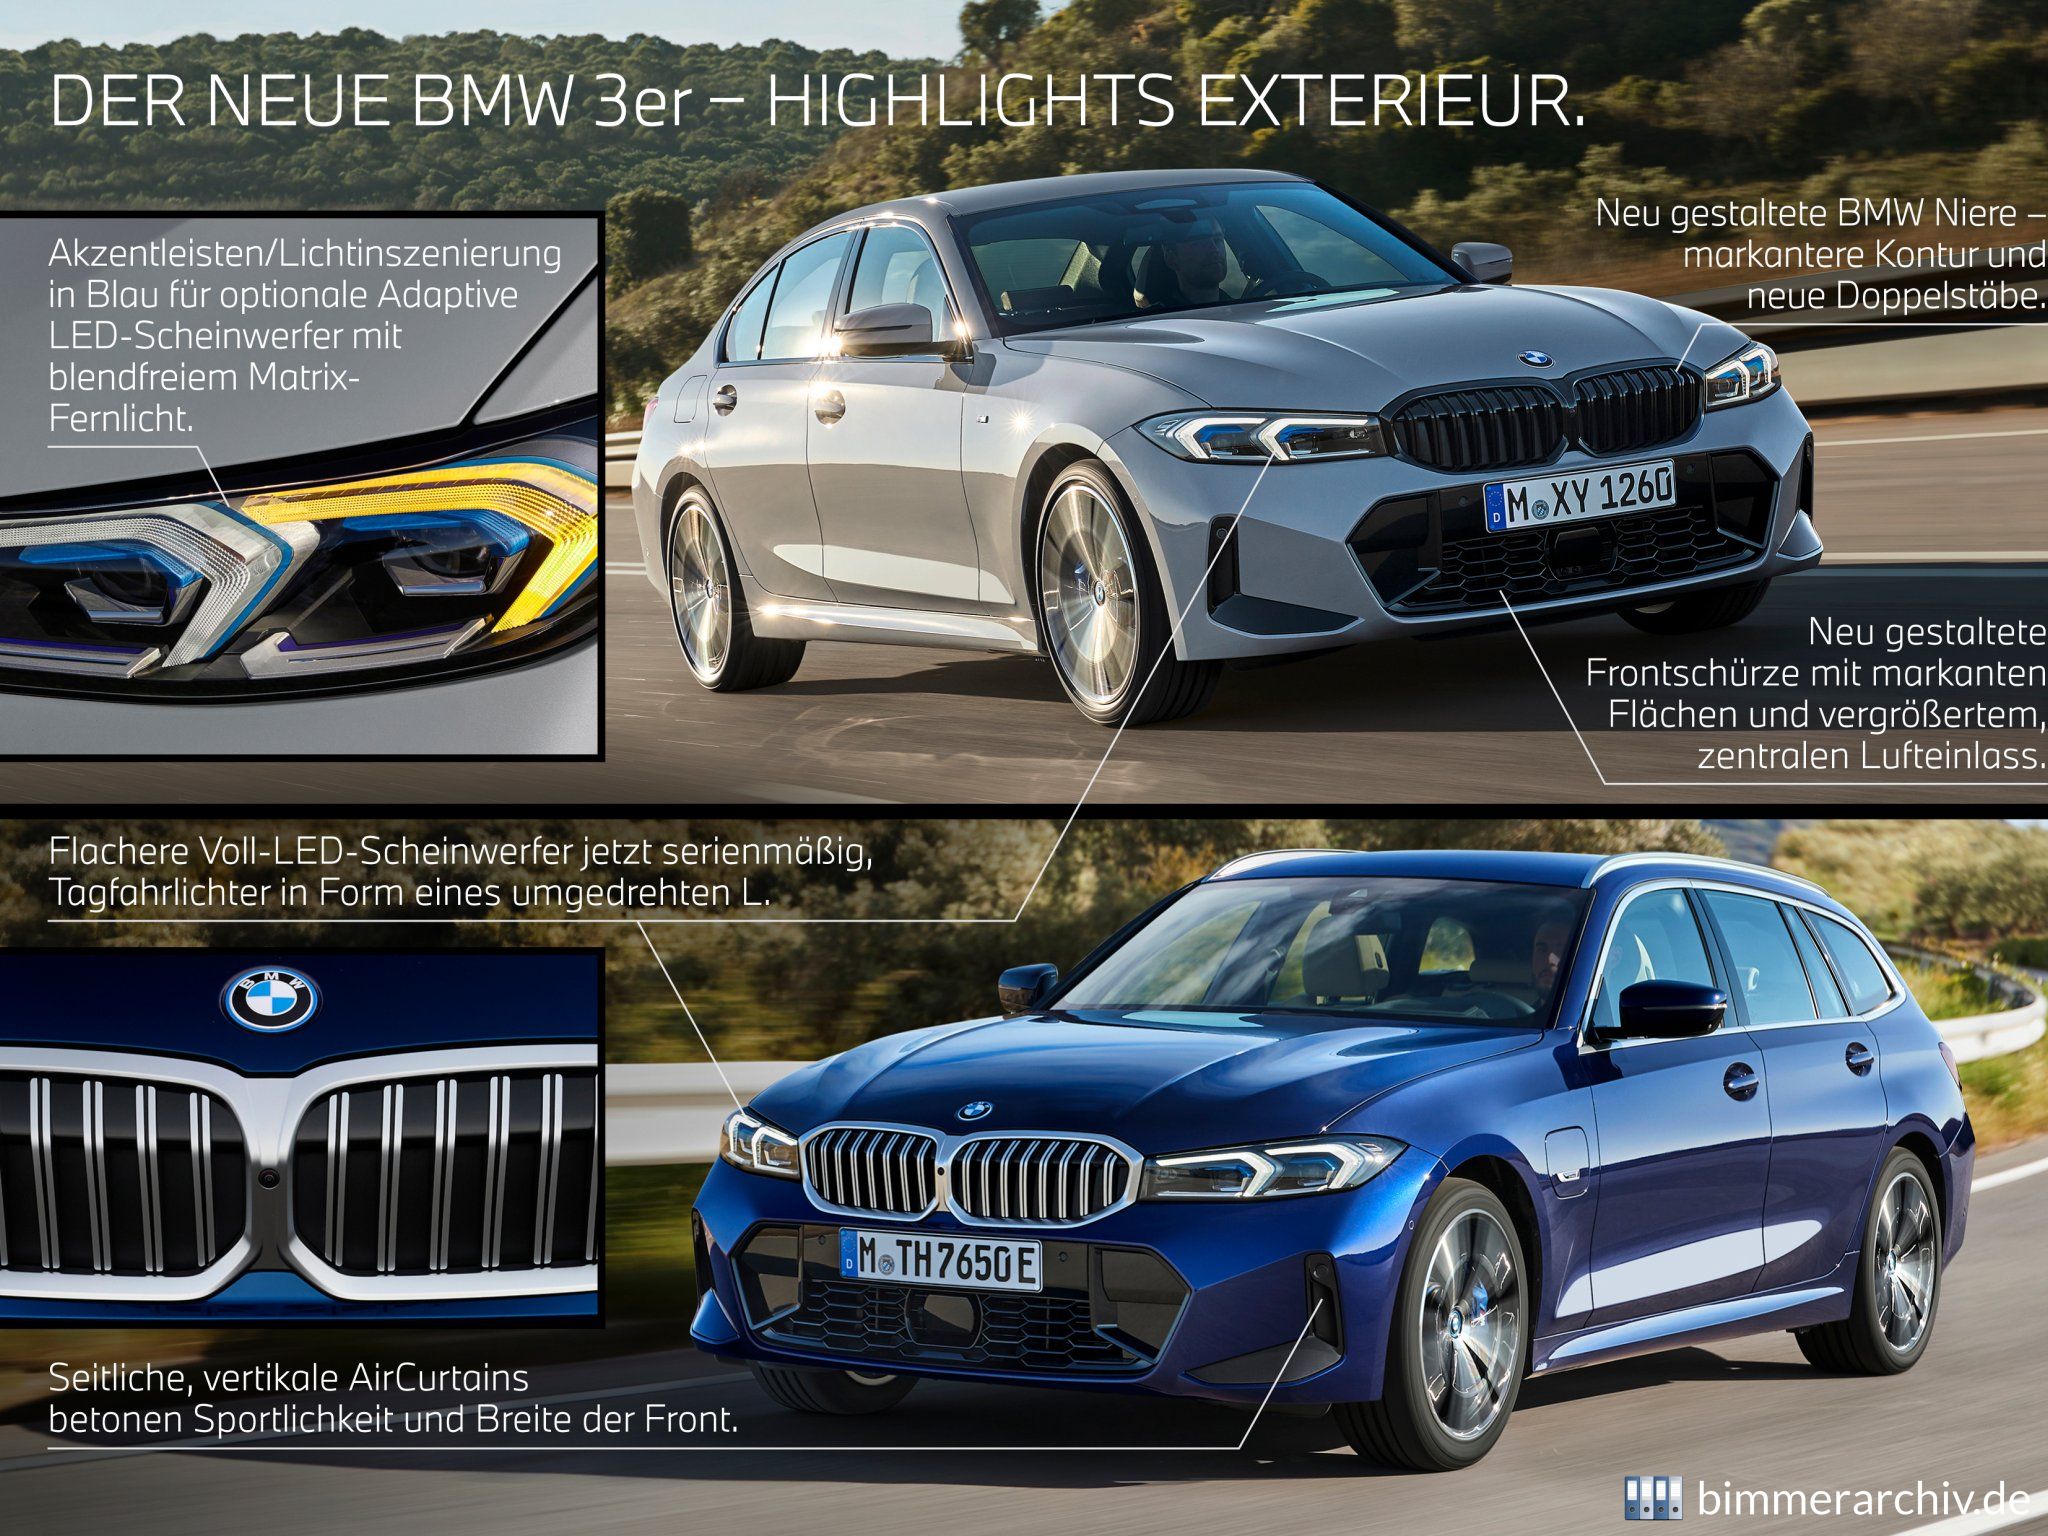 BMW 3 Series - Highlights